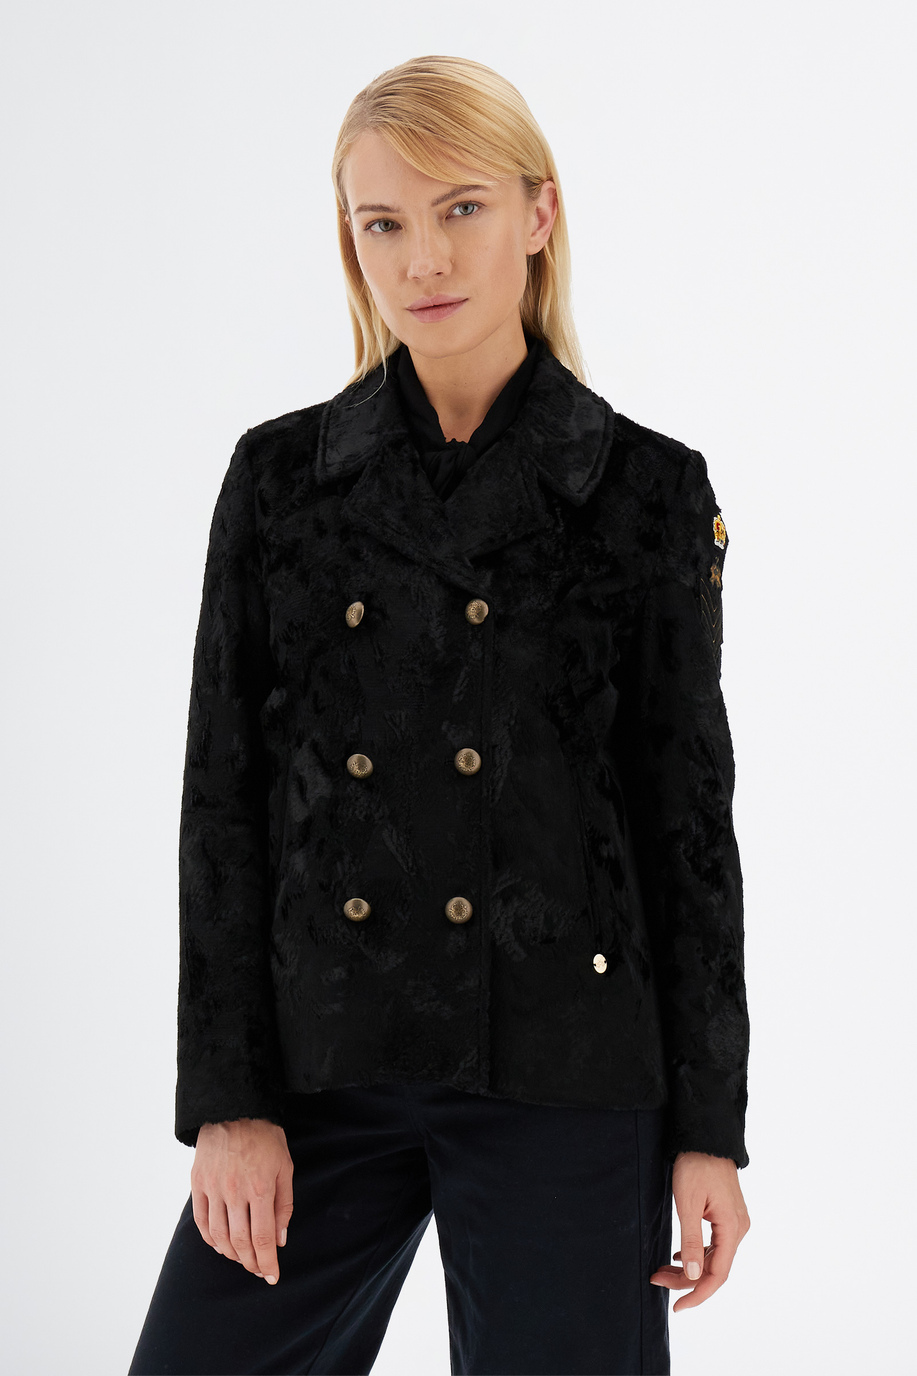 Damen Langarm England Jacke mit Pelz - Outdoor | La Martina - Official Online Shop